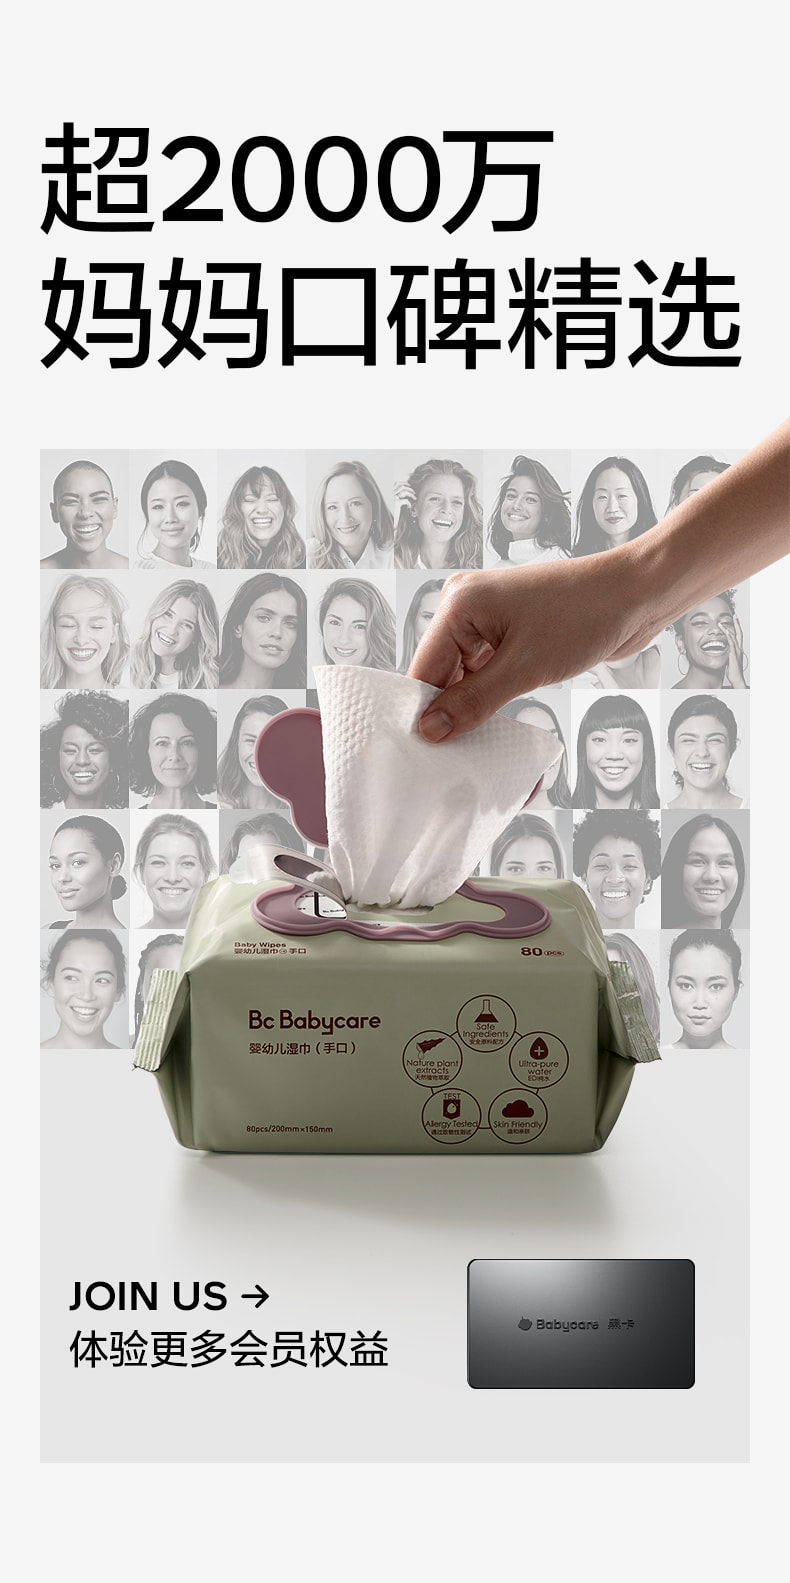 【中国直邮】Bc Babycare 婴幼儿手口湿巾 200mm*150mm-80抽/包